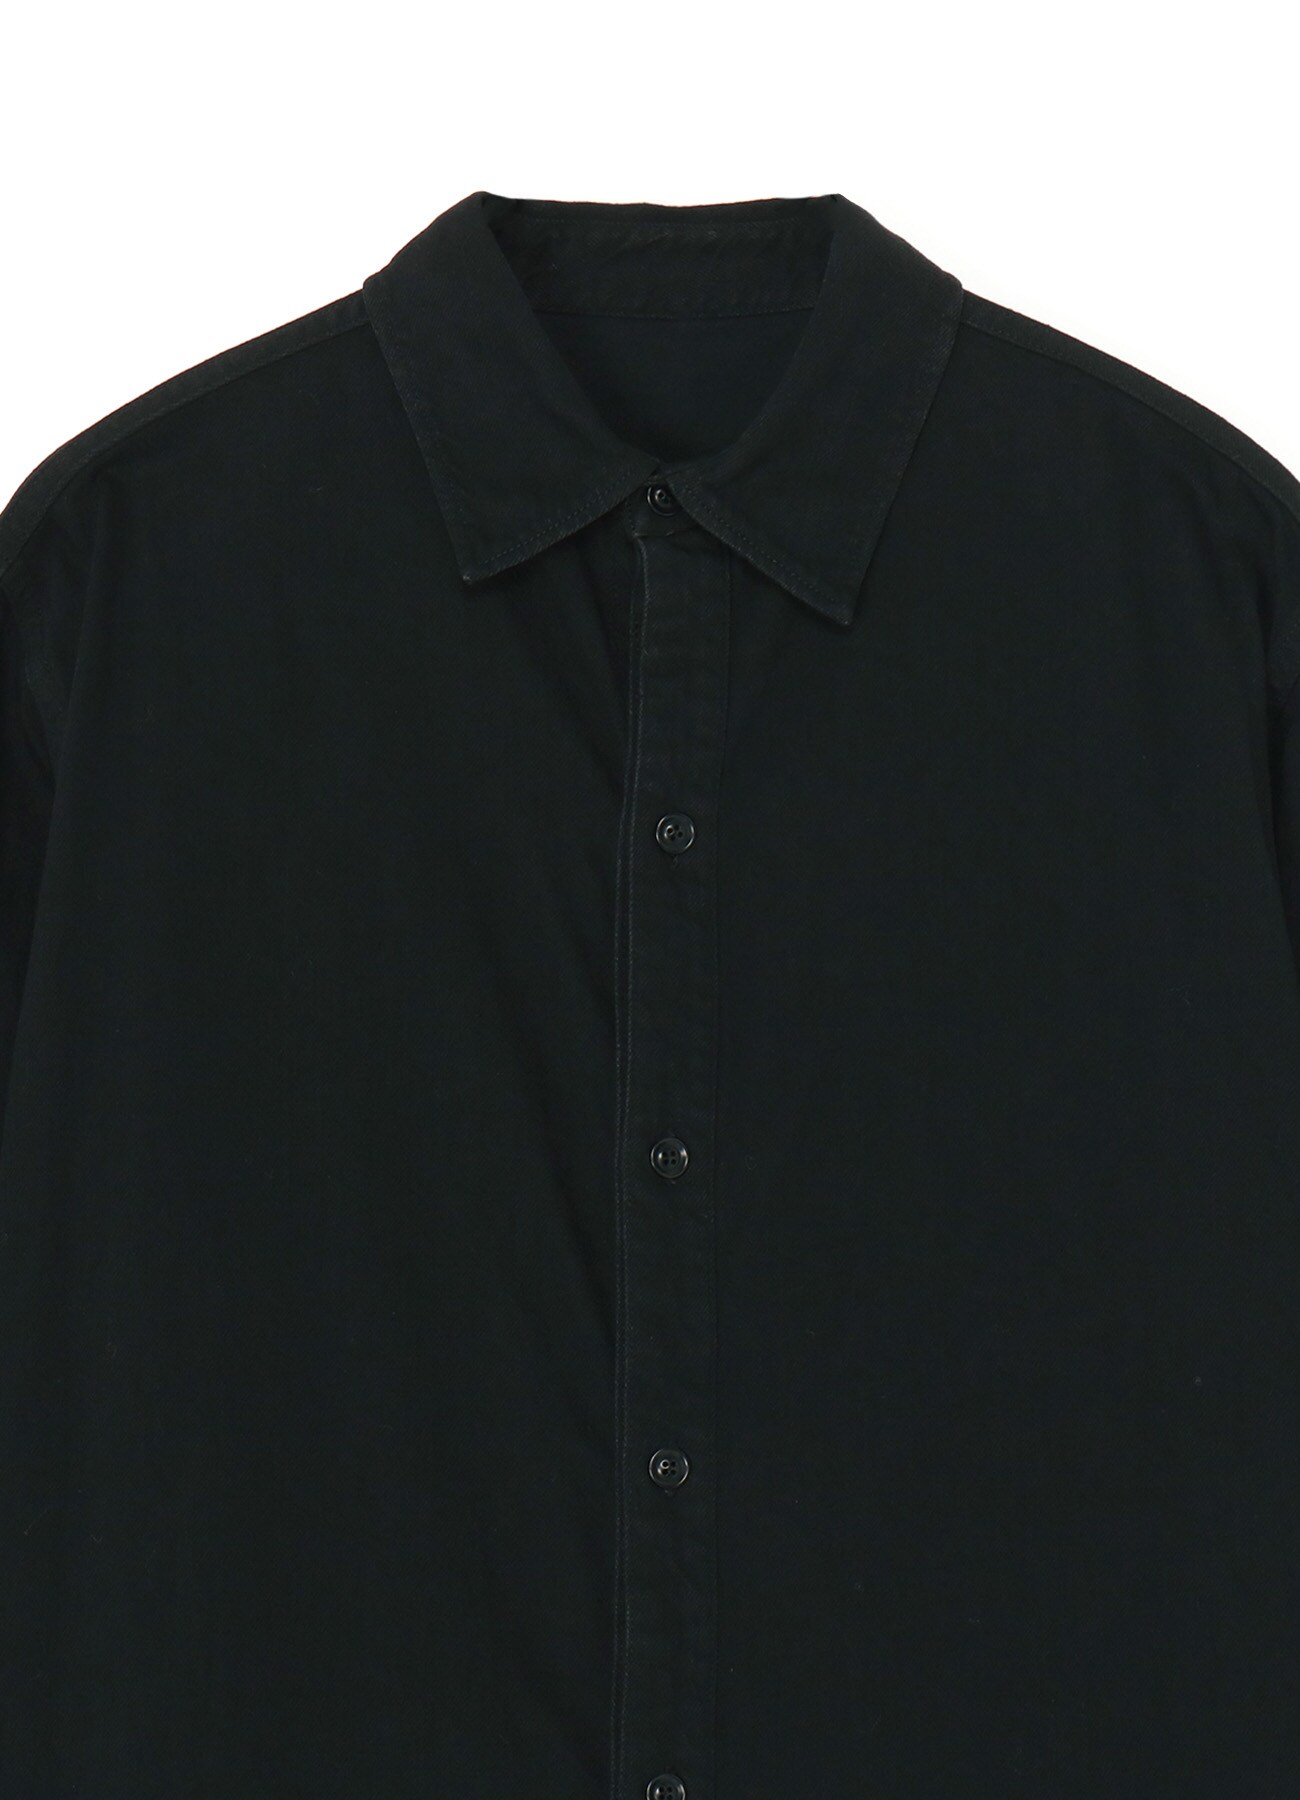 8oz BLACK DENIM DOUBLE PLACKET DRESS